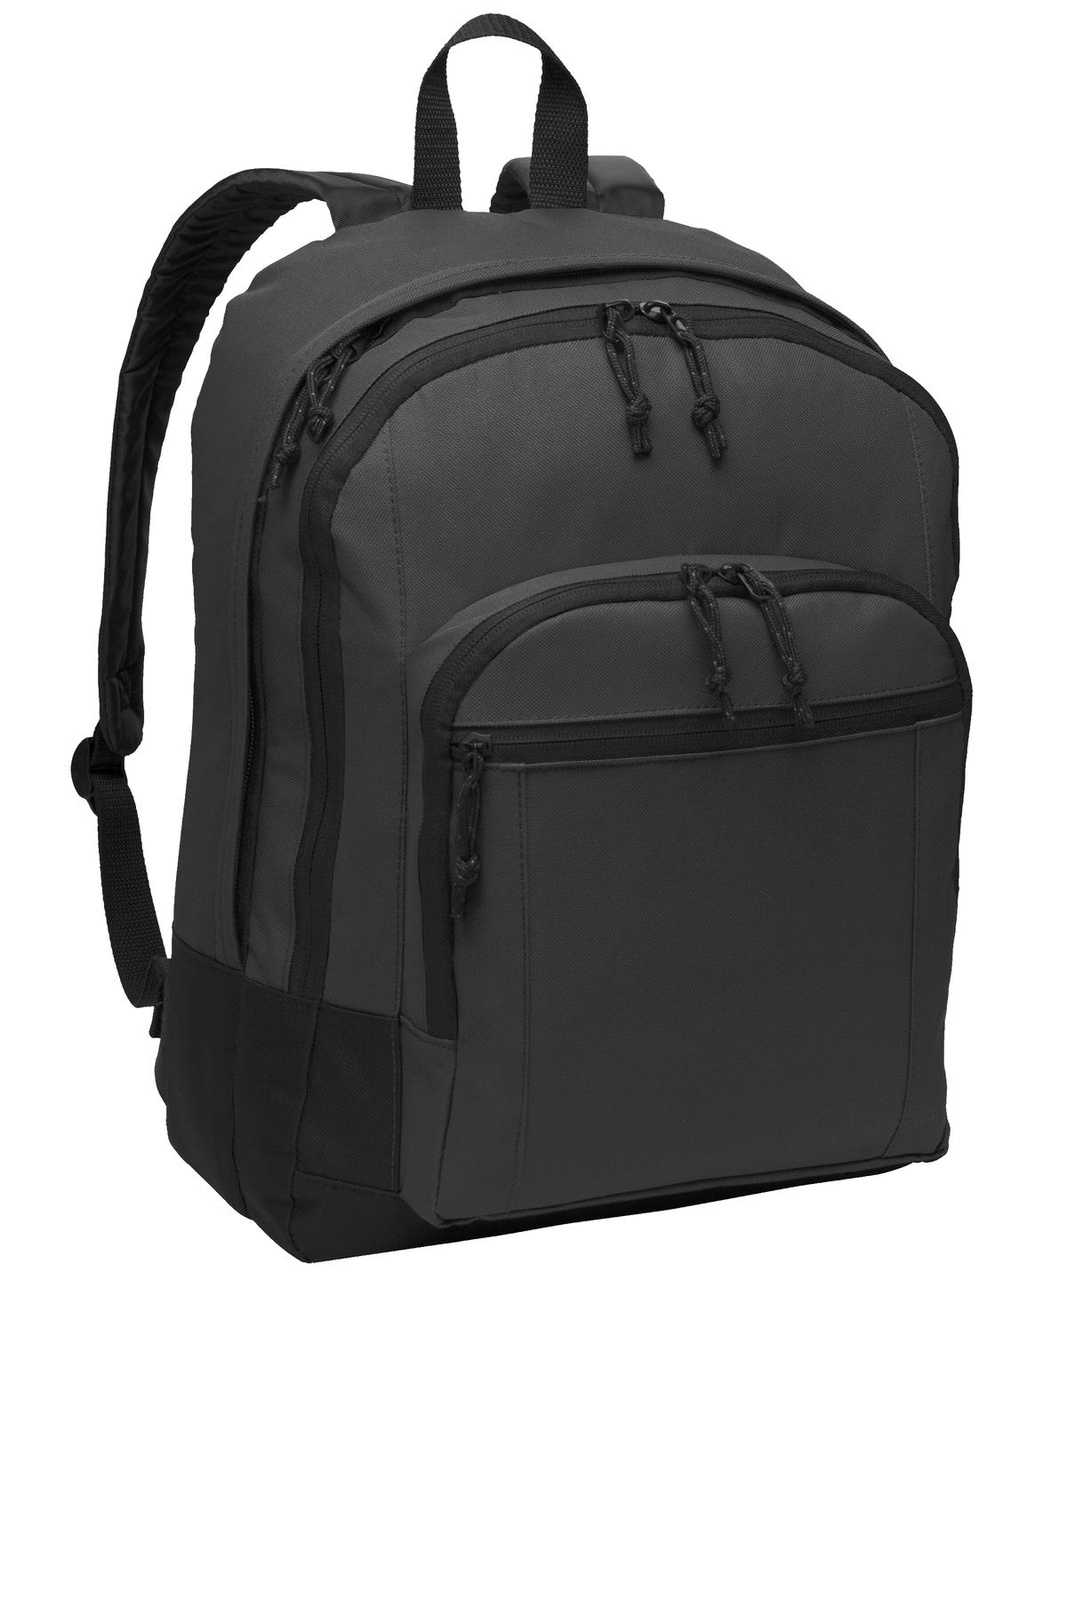 Port Authority BG204 Basic Backpack - Dark Charcoal - HIT a Double - 1